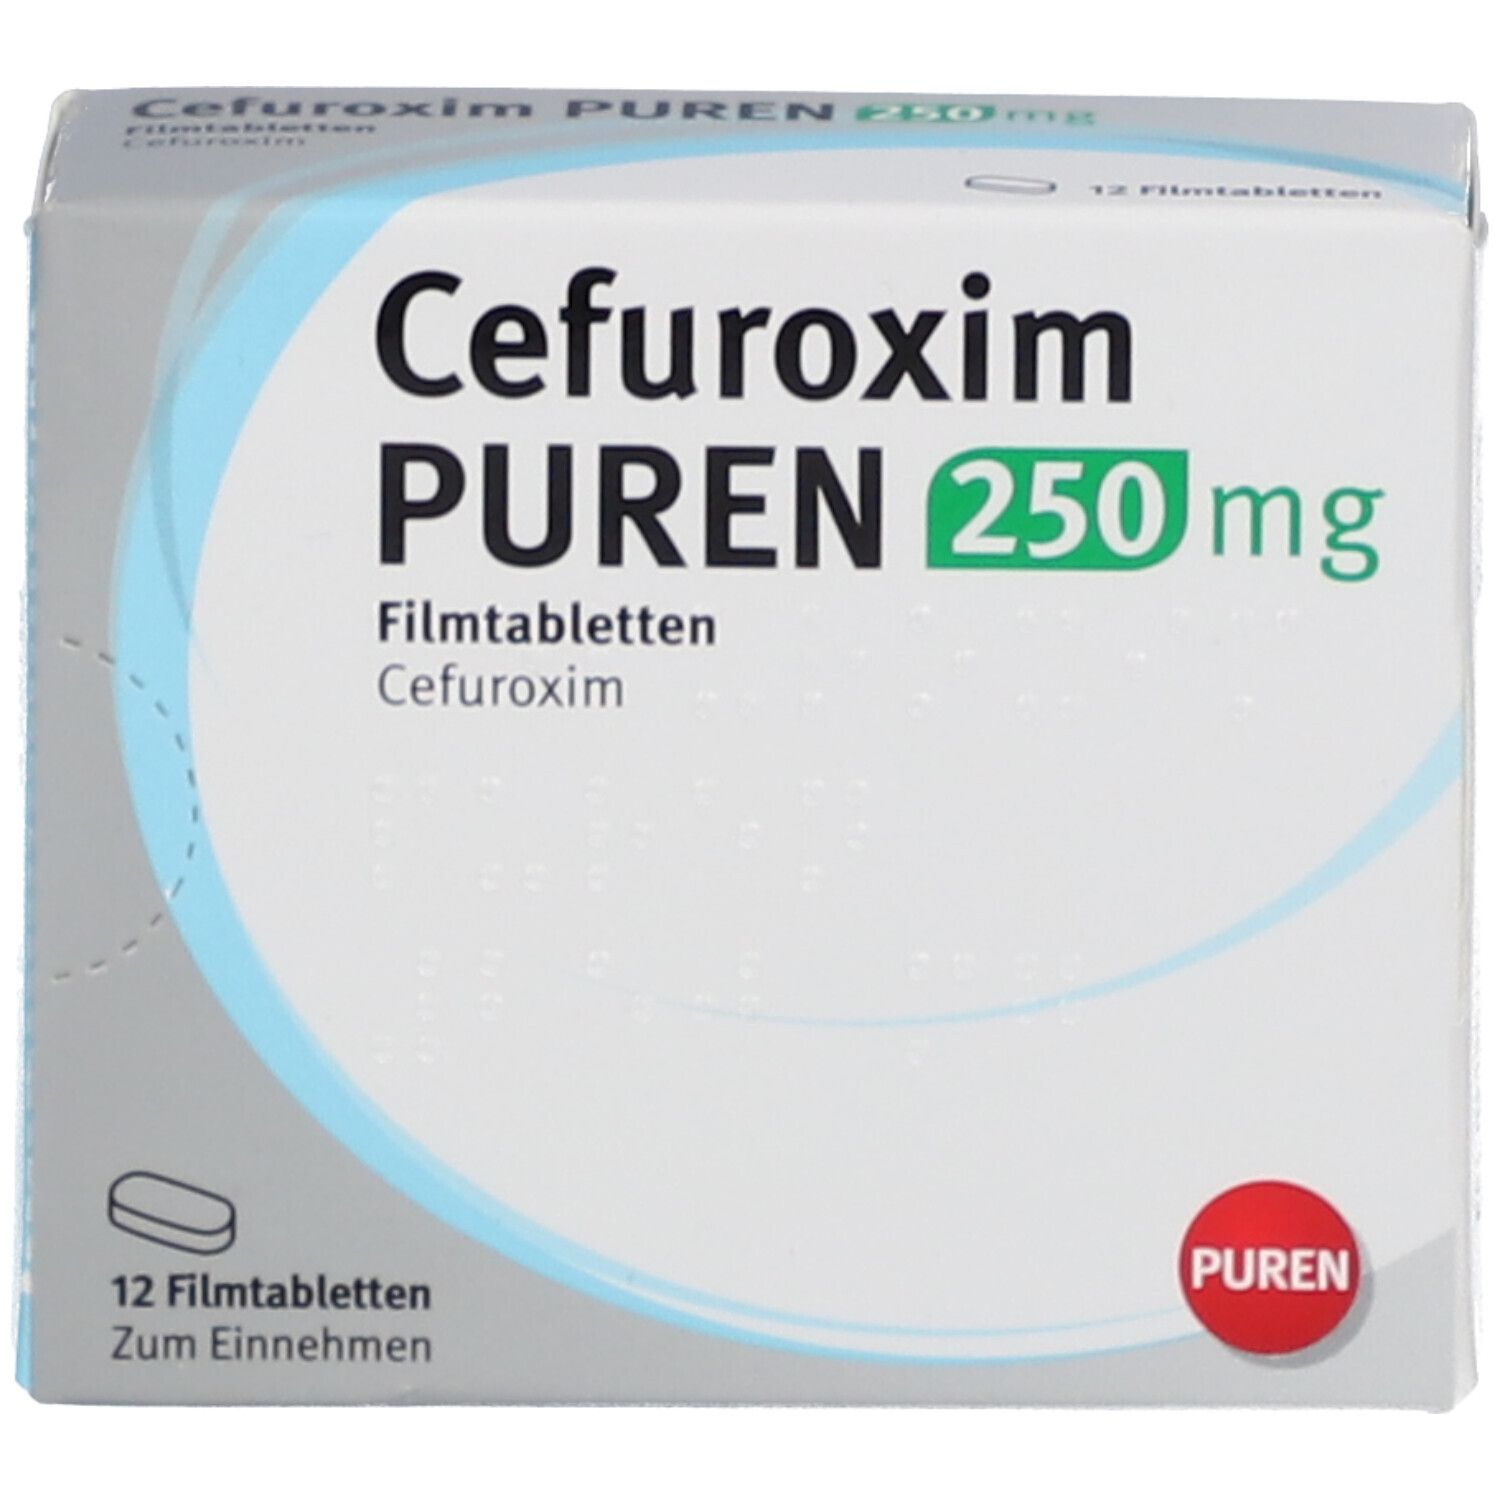 Cefuroxim PUREN 250 mg